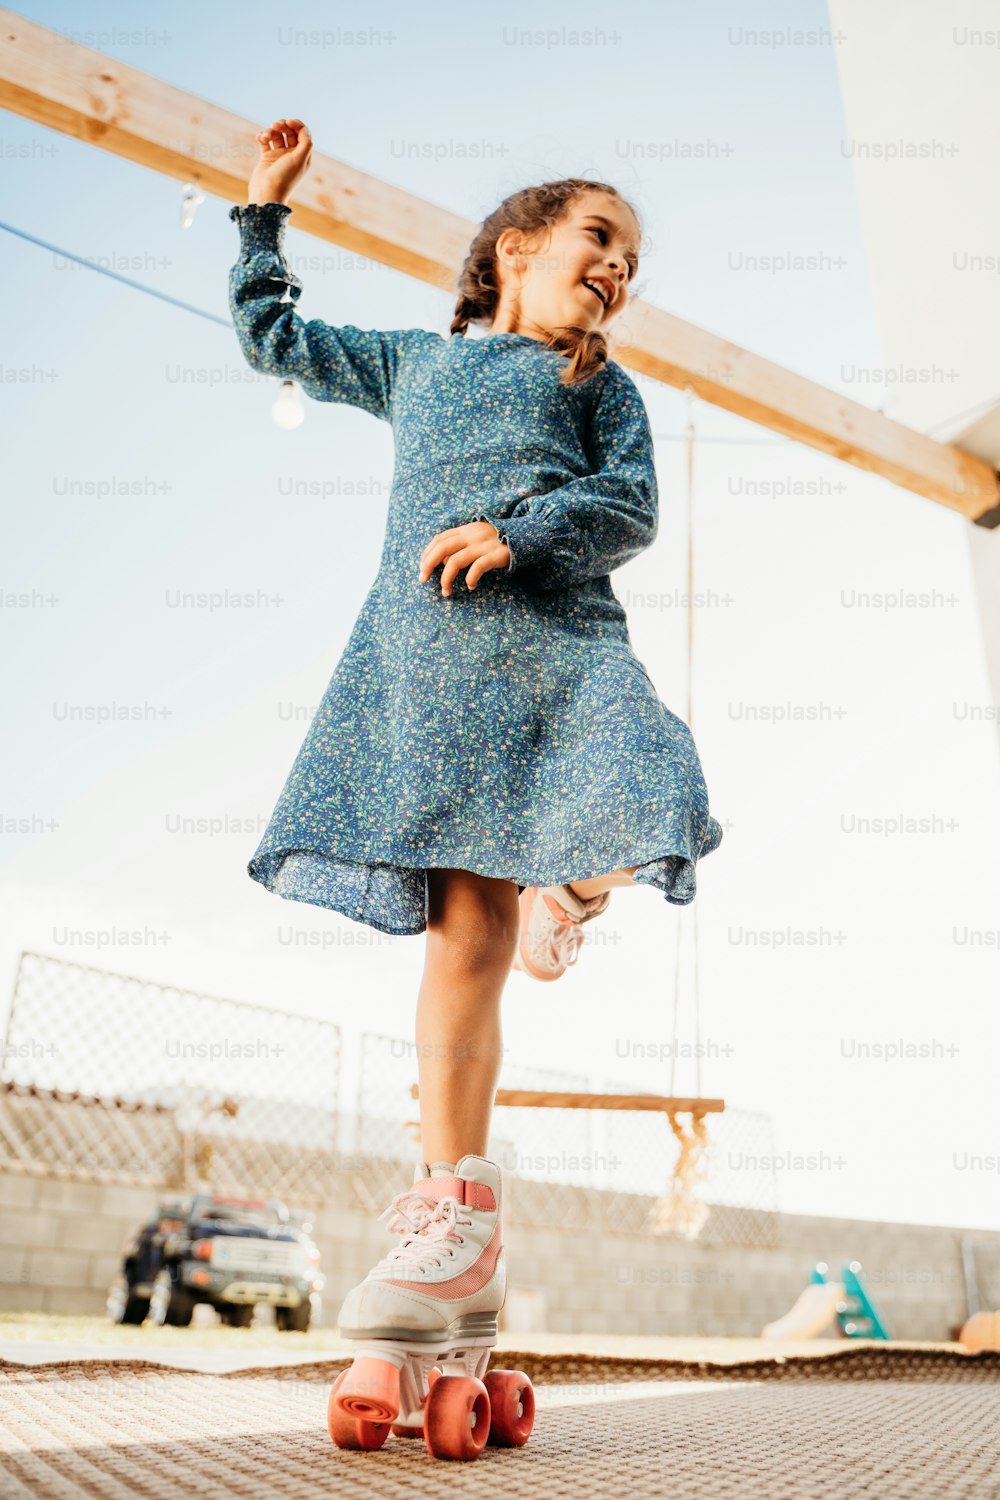 a little girl standing on top of a skateboard